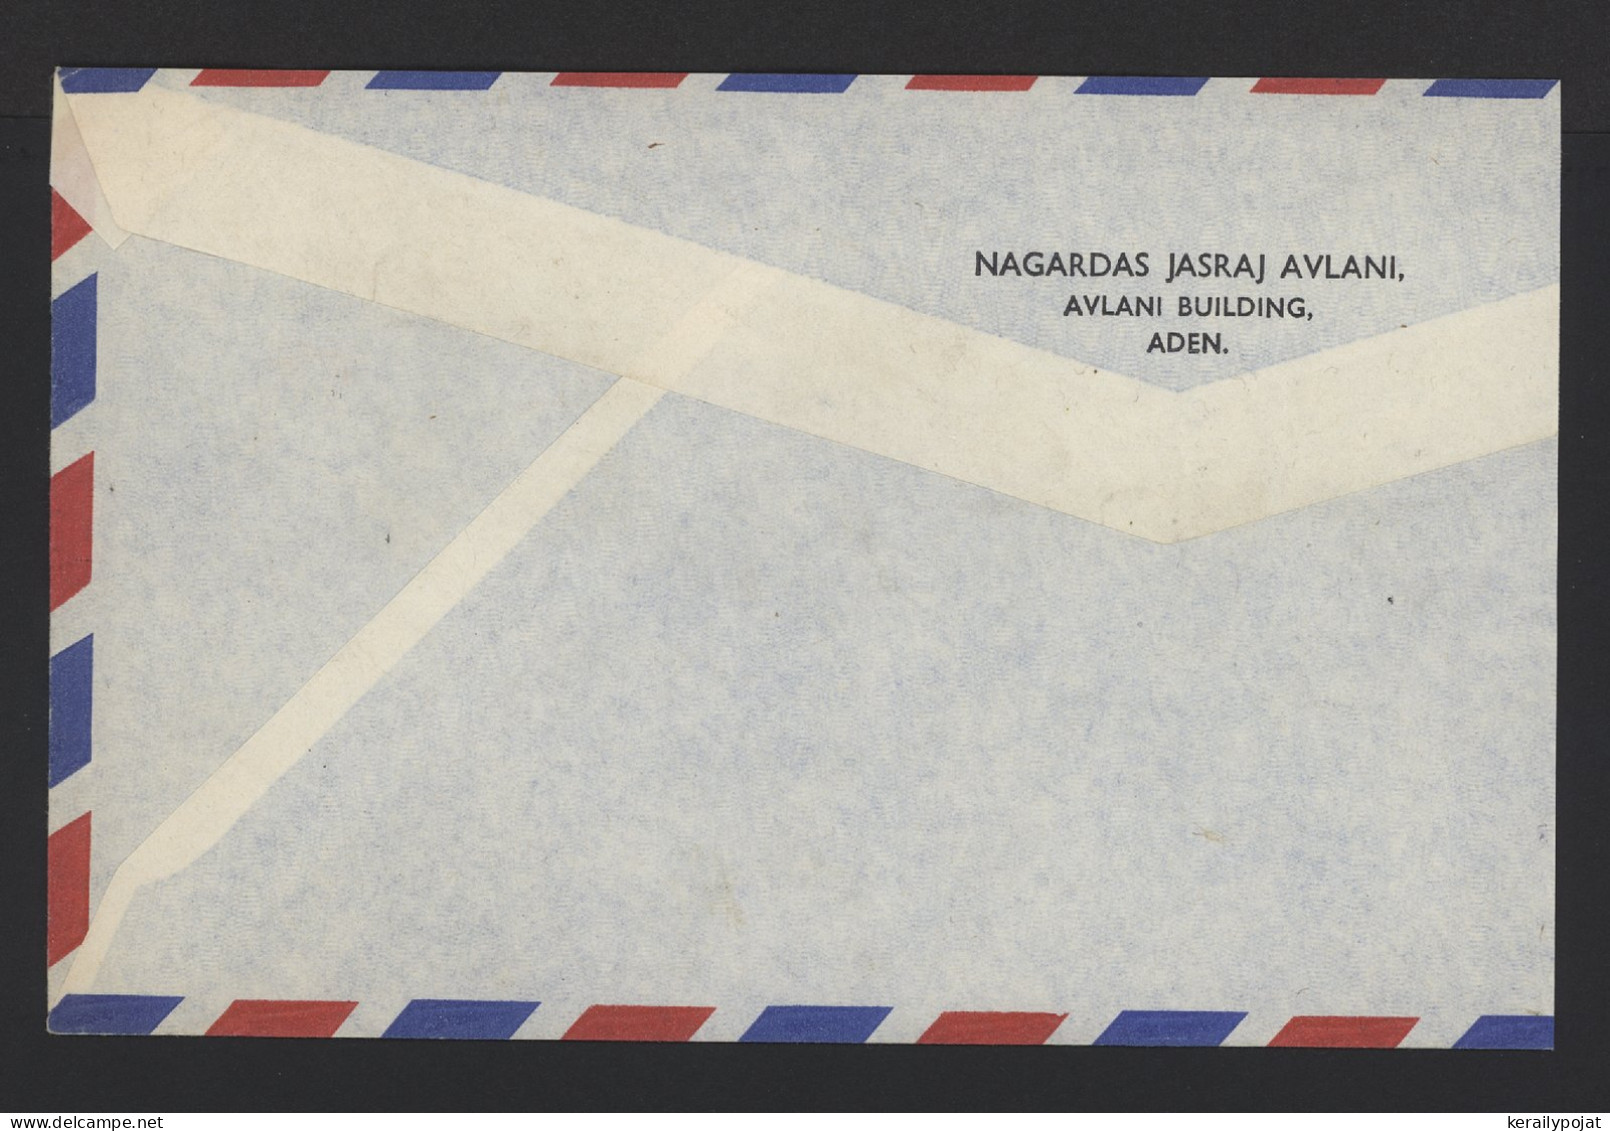 Aden 1965 Crater Air Mail Cover To Denmark__(12402) - Aden (1854-1963)